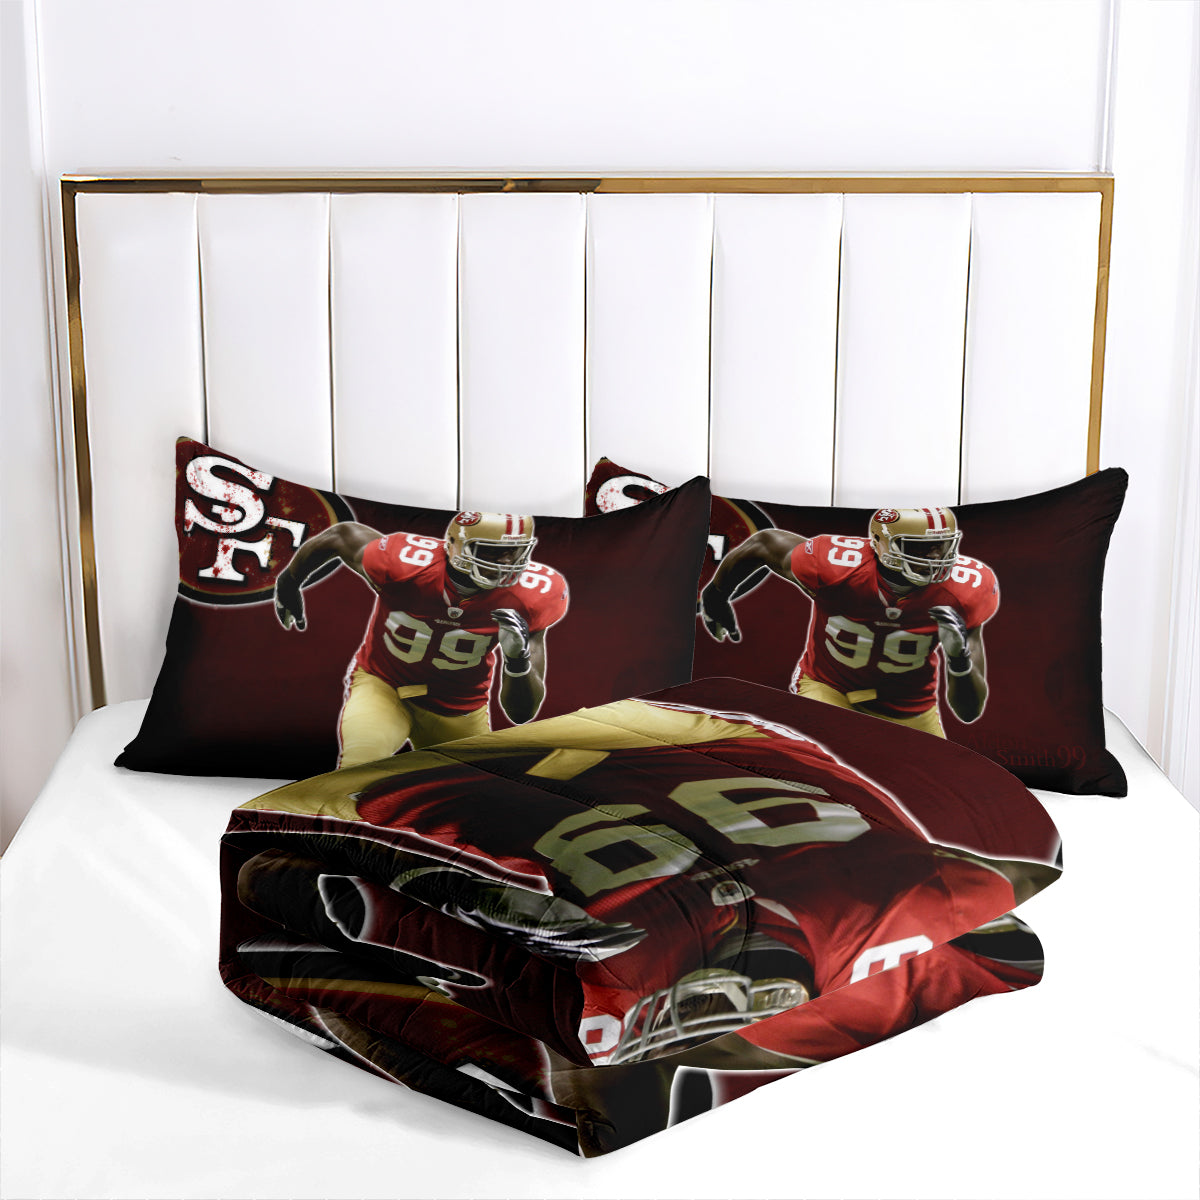 San Francisco 49ers Football Team Comforter Pillowcase Sets Blanket All Season Reversible Quilted Duvet